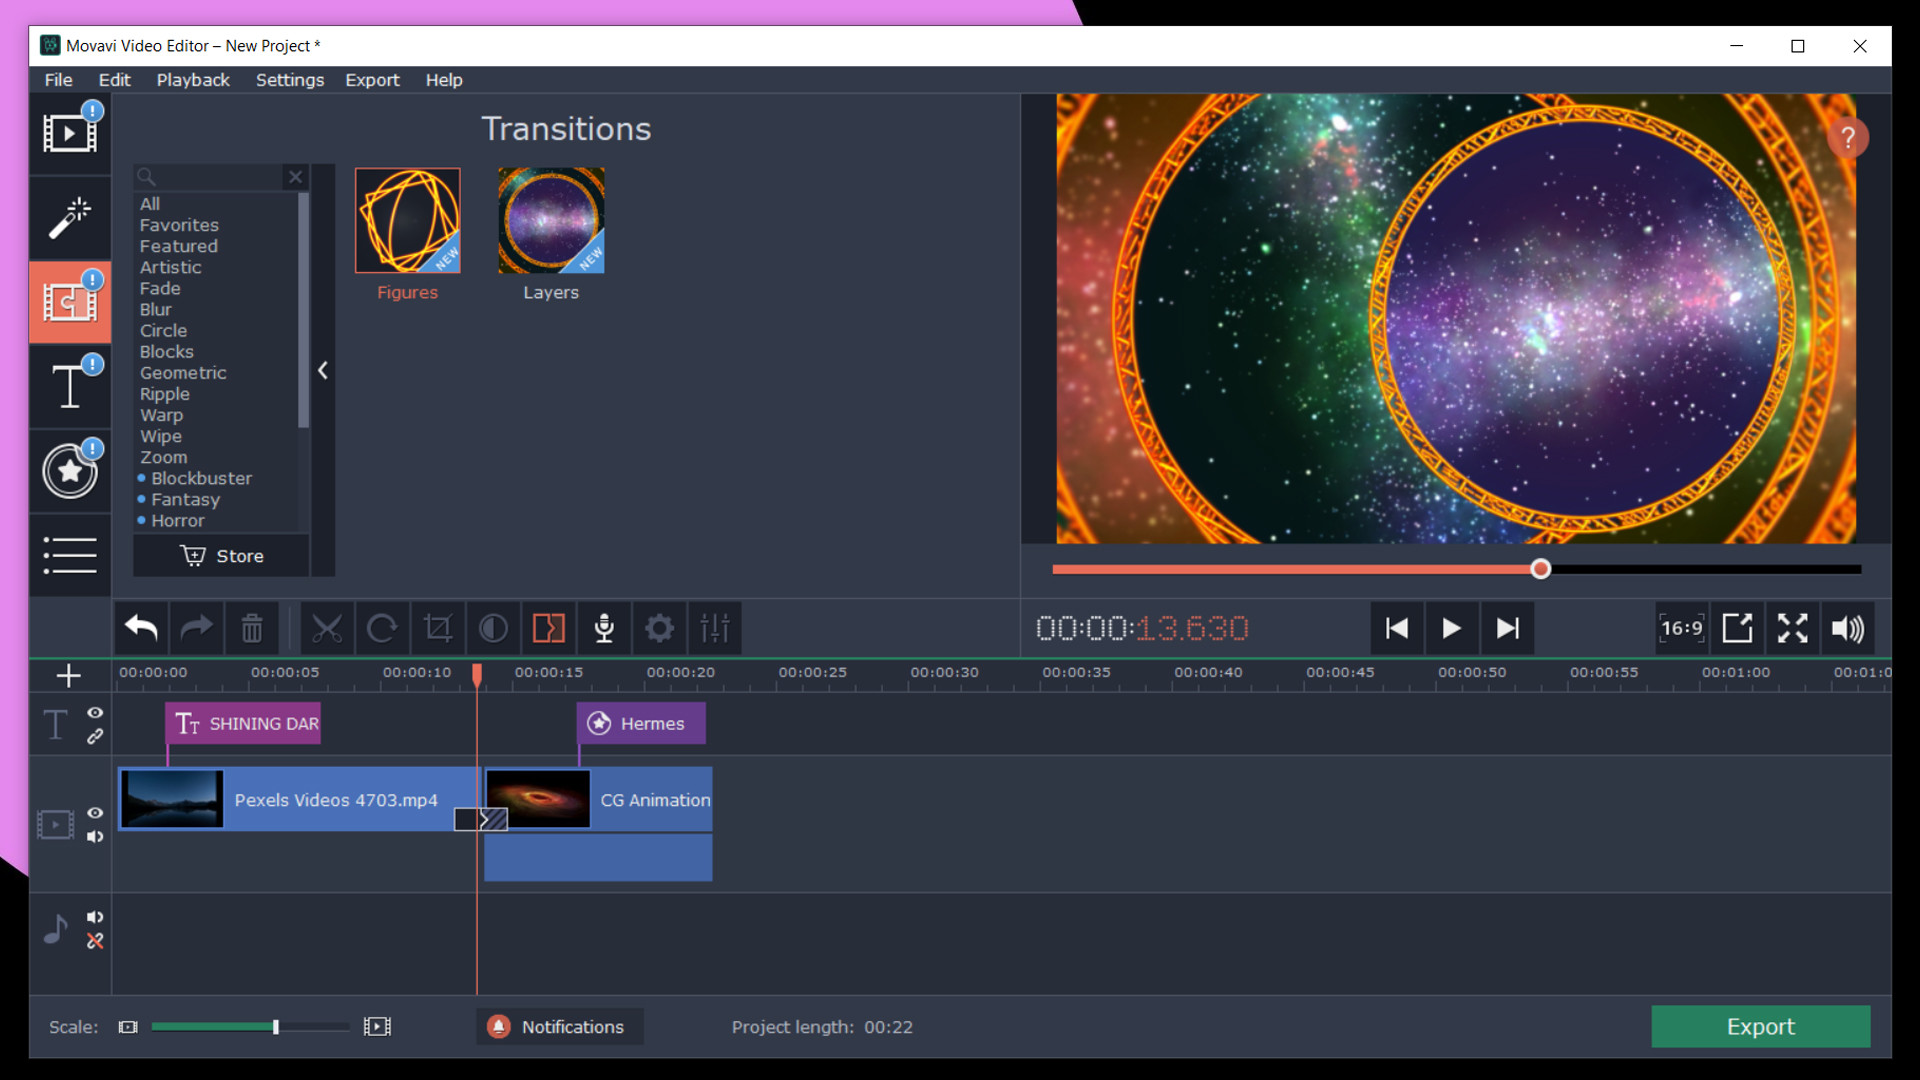 Movavi Video Editor Plus 2020 - Mystical Galaxy Pack DLC Steam CD Key